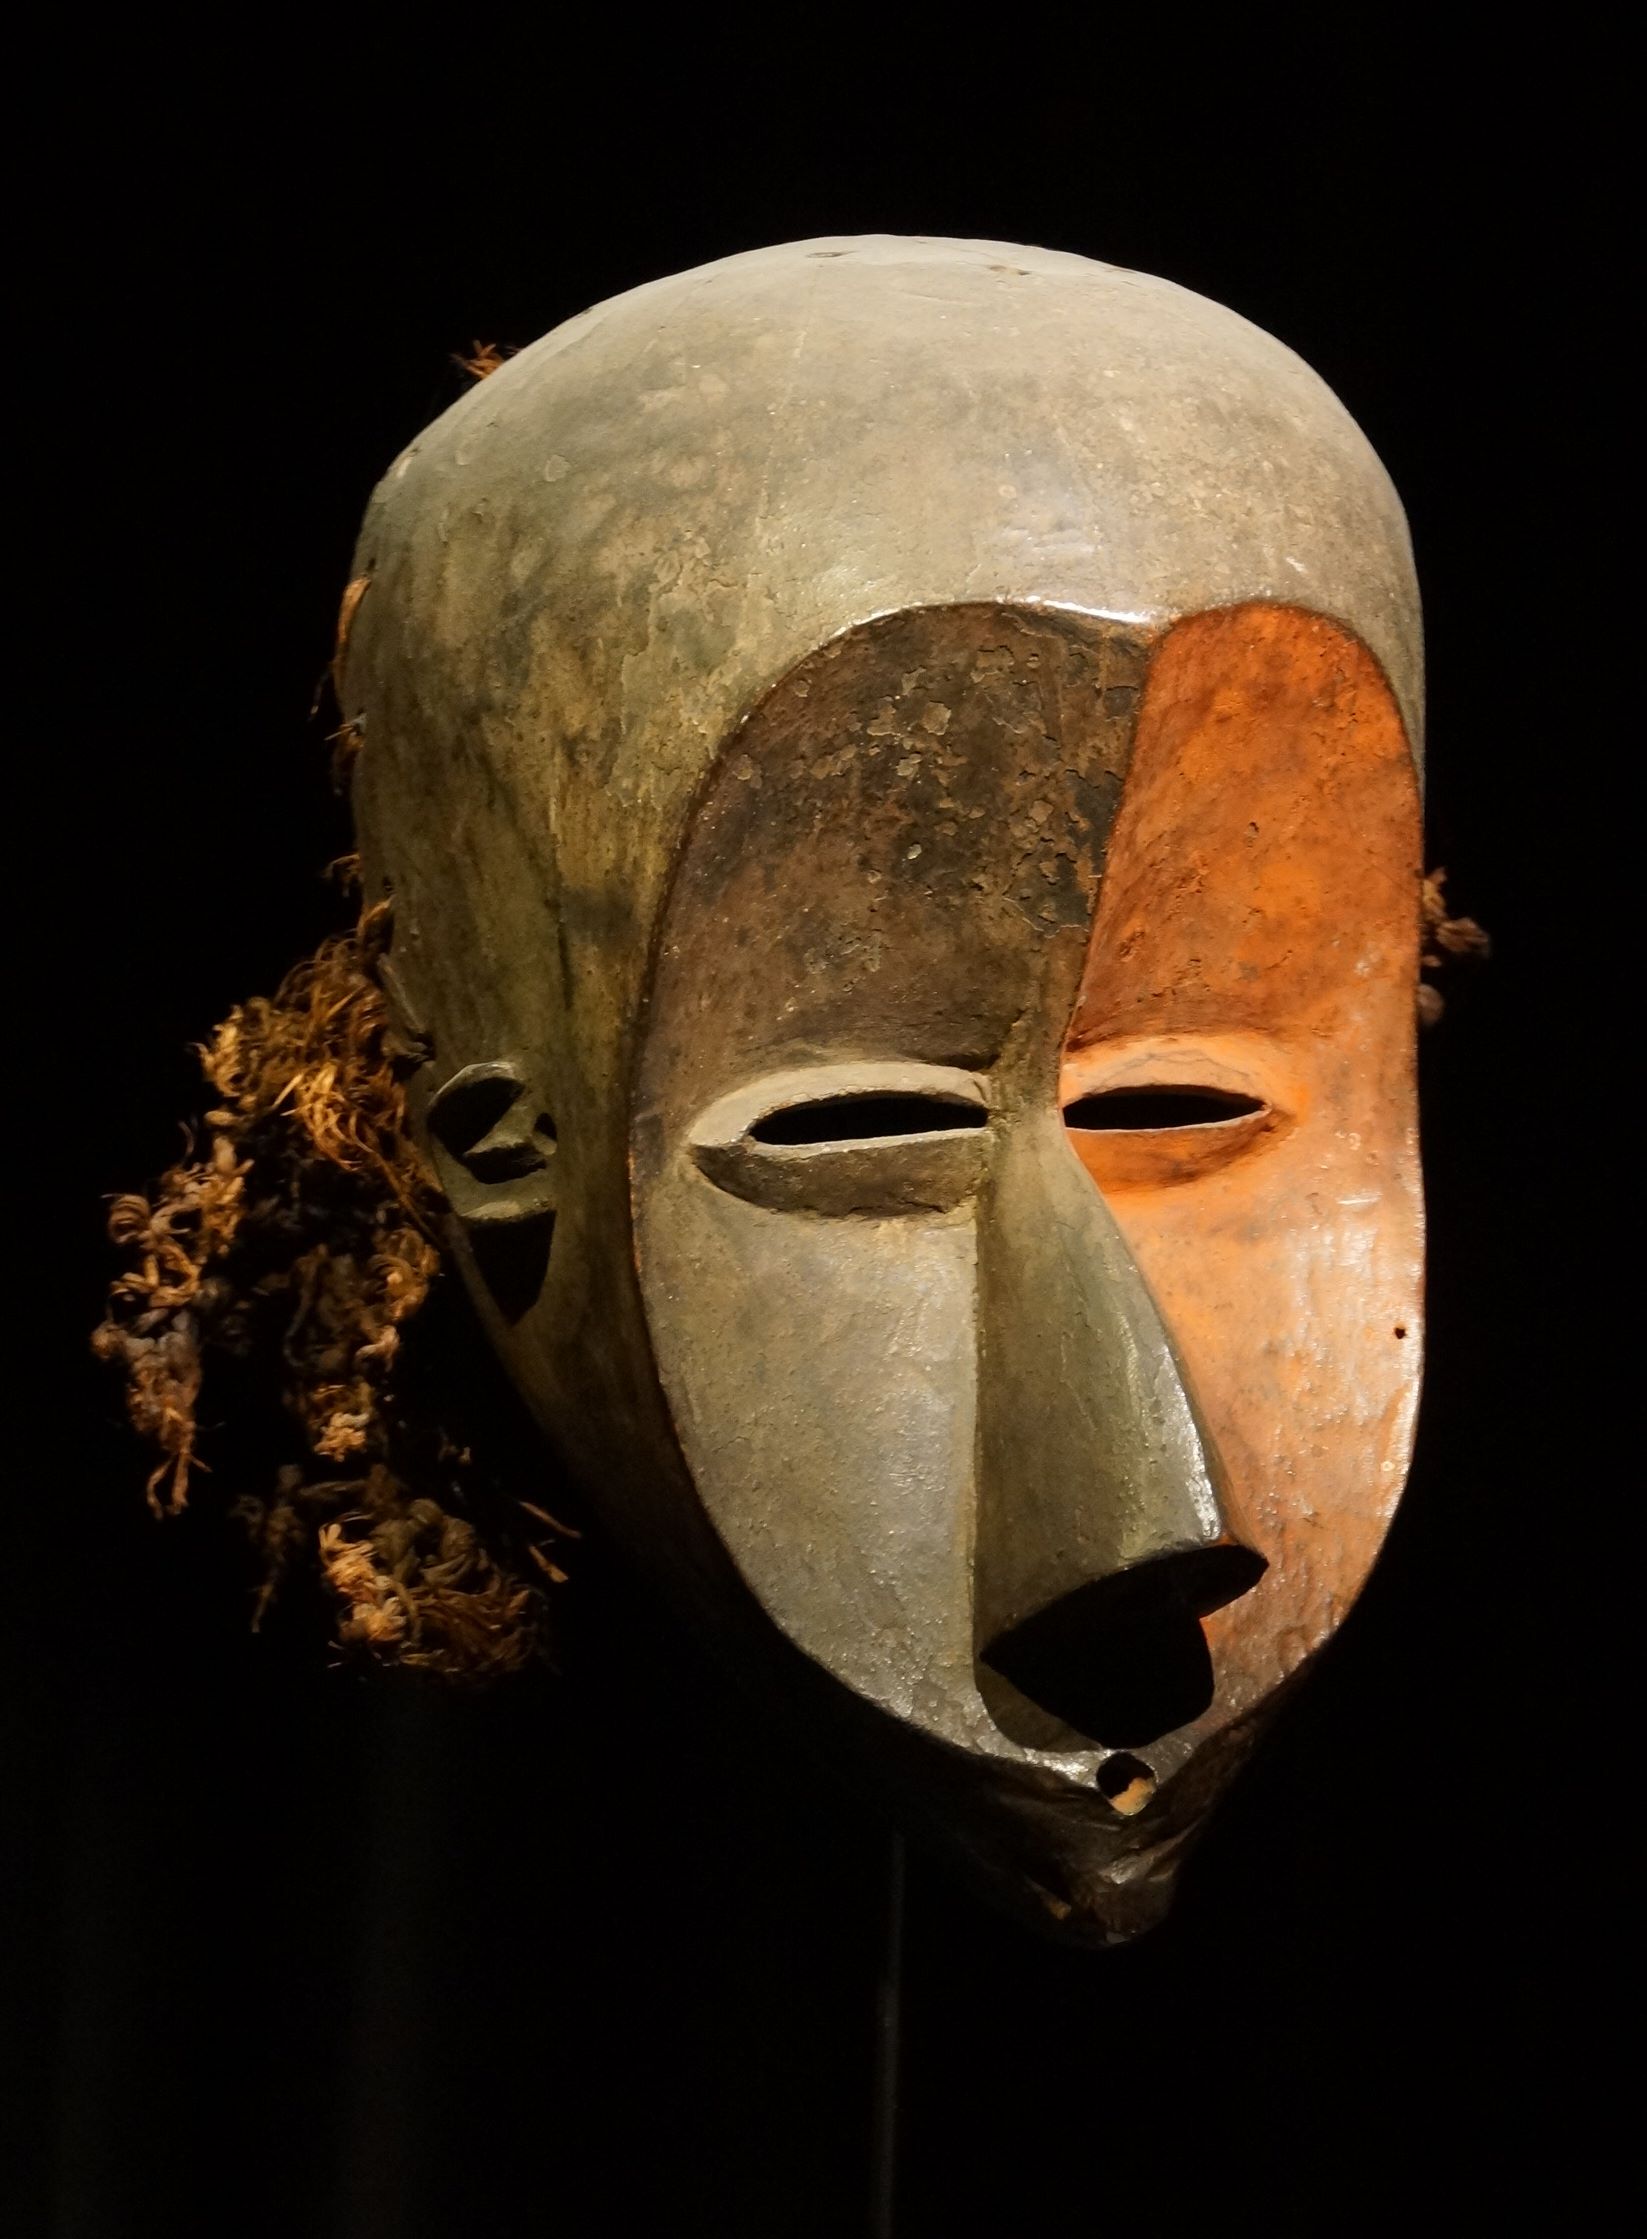 Verplicht Dubbelzinnig het laatste File:Masker, Elimba, Mahongwe, Gabon. Afrika Museum, Berg en Dal, Nr.  17-2092.JPG - Wikimedia Commons